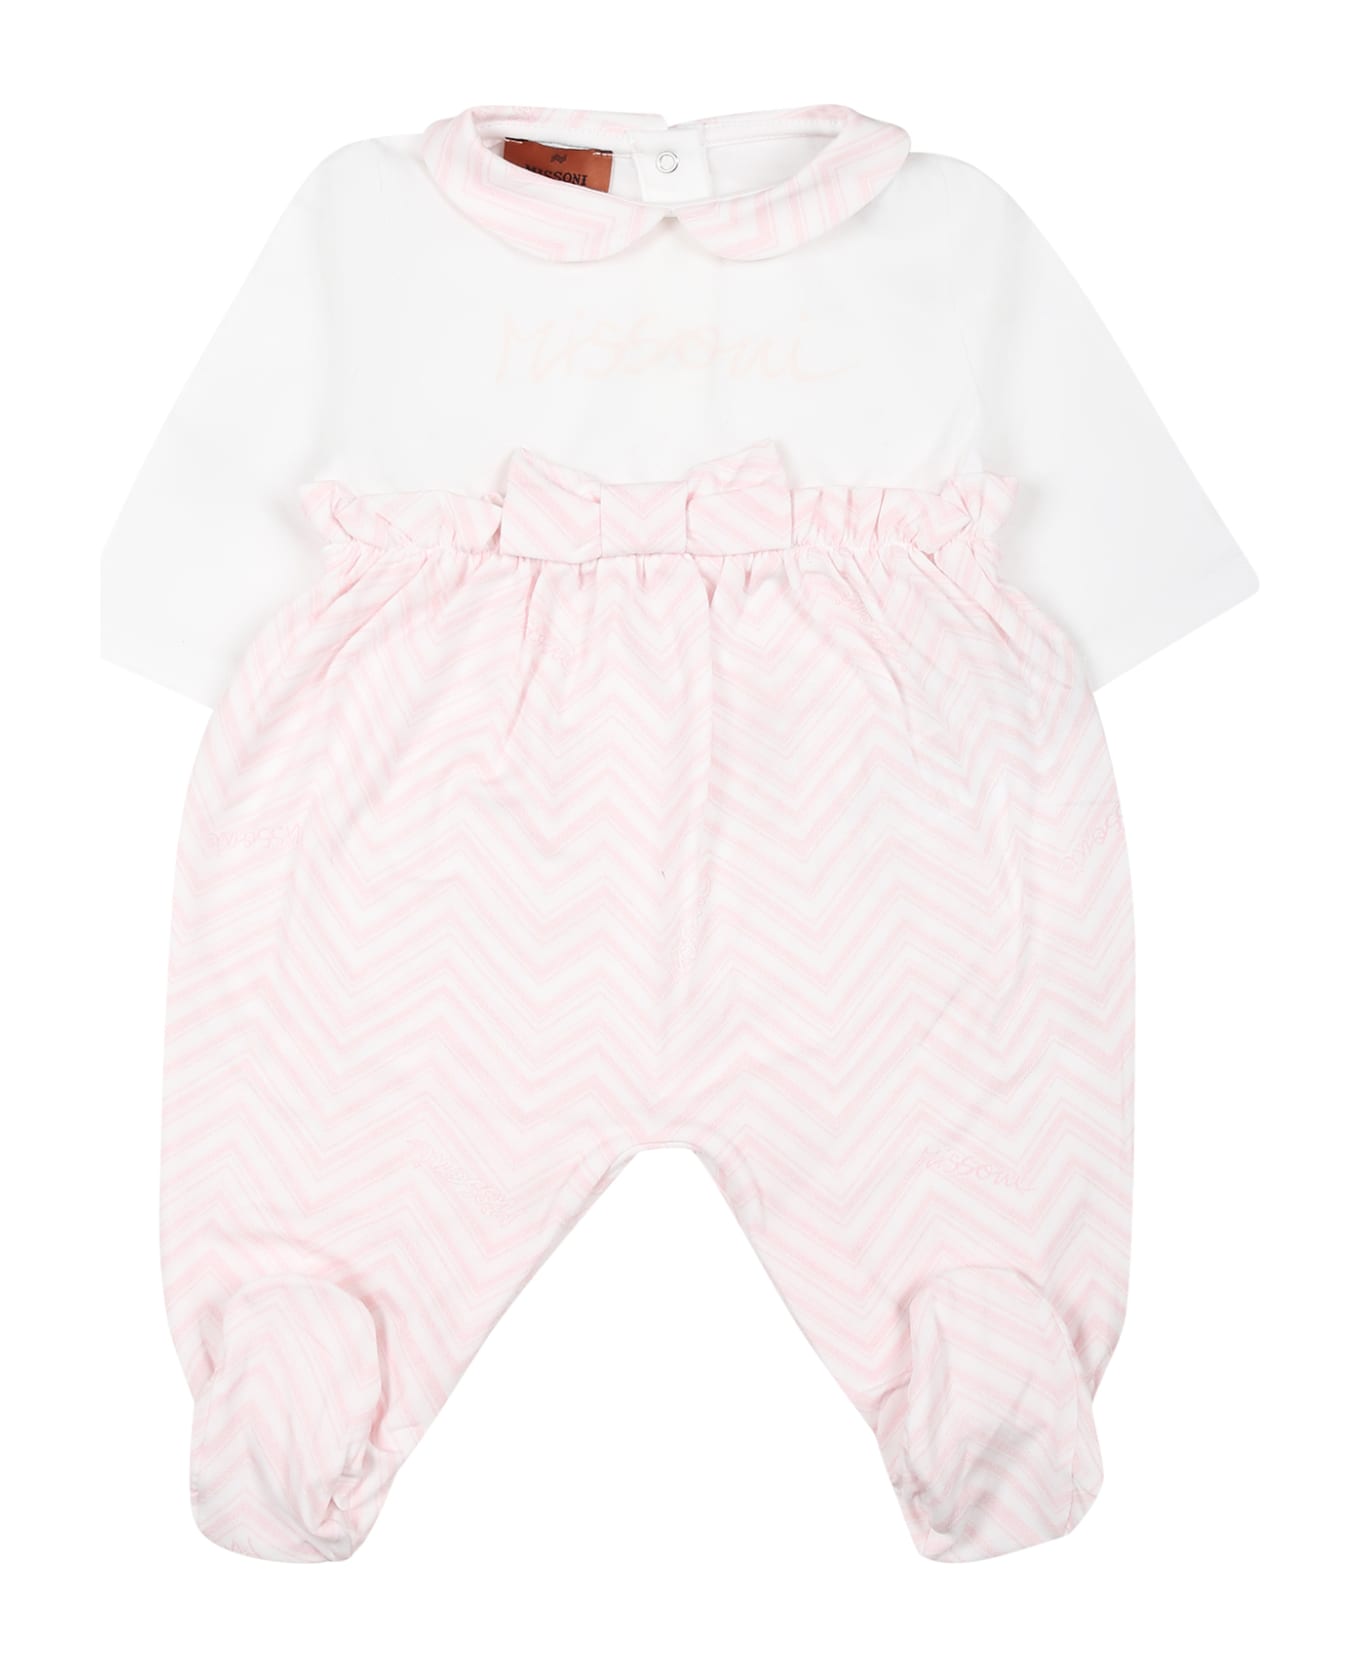 Missoni White Set For Baby Girl With Chevron Pattern - White